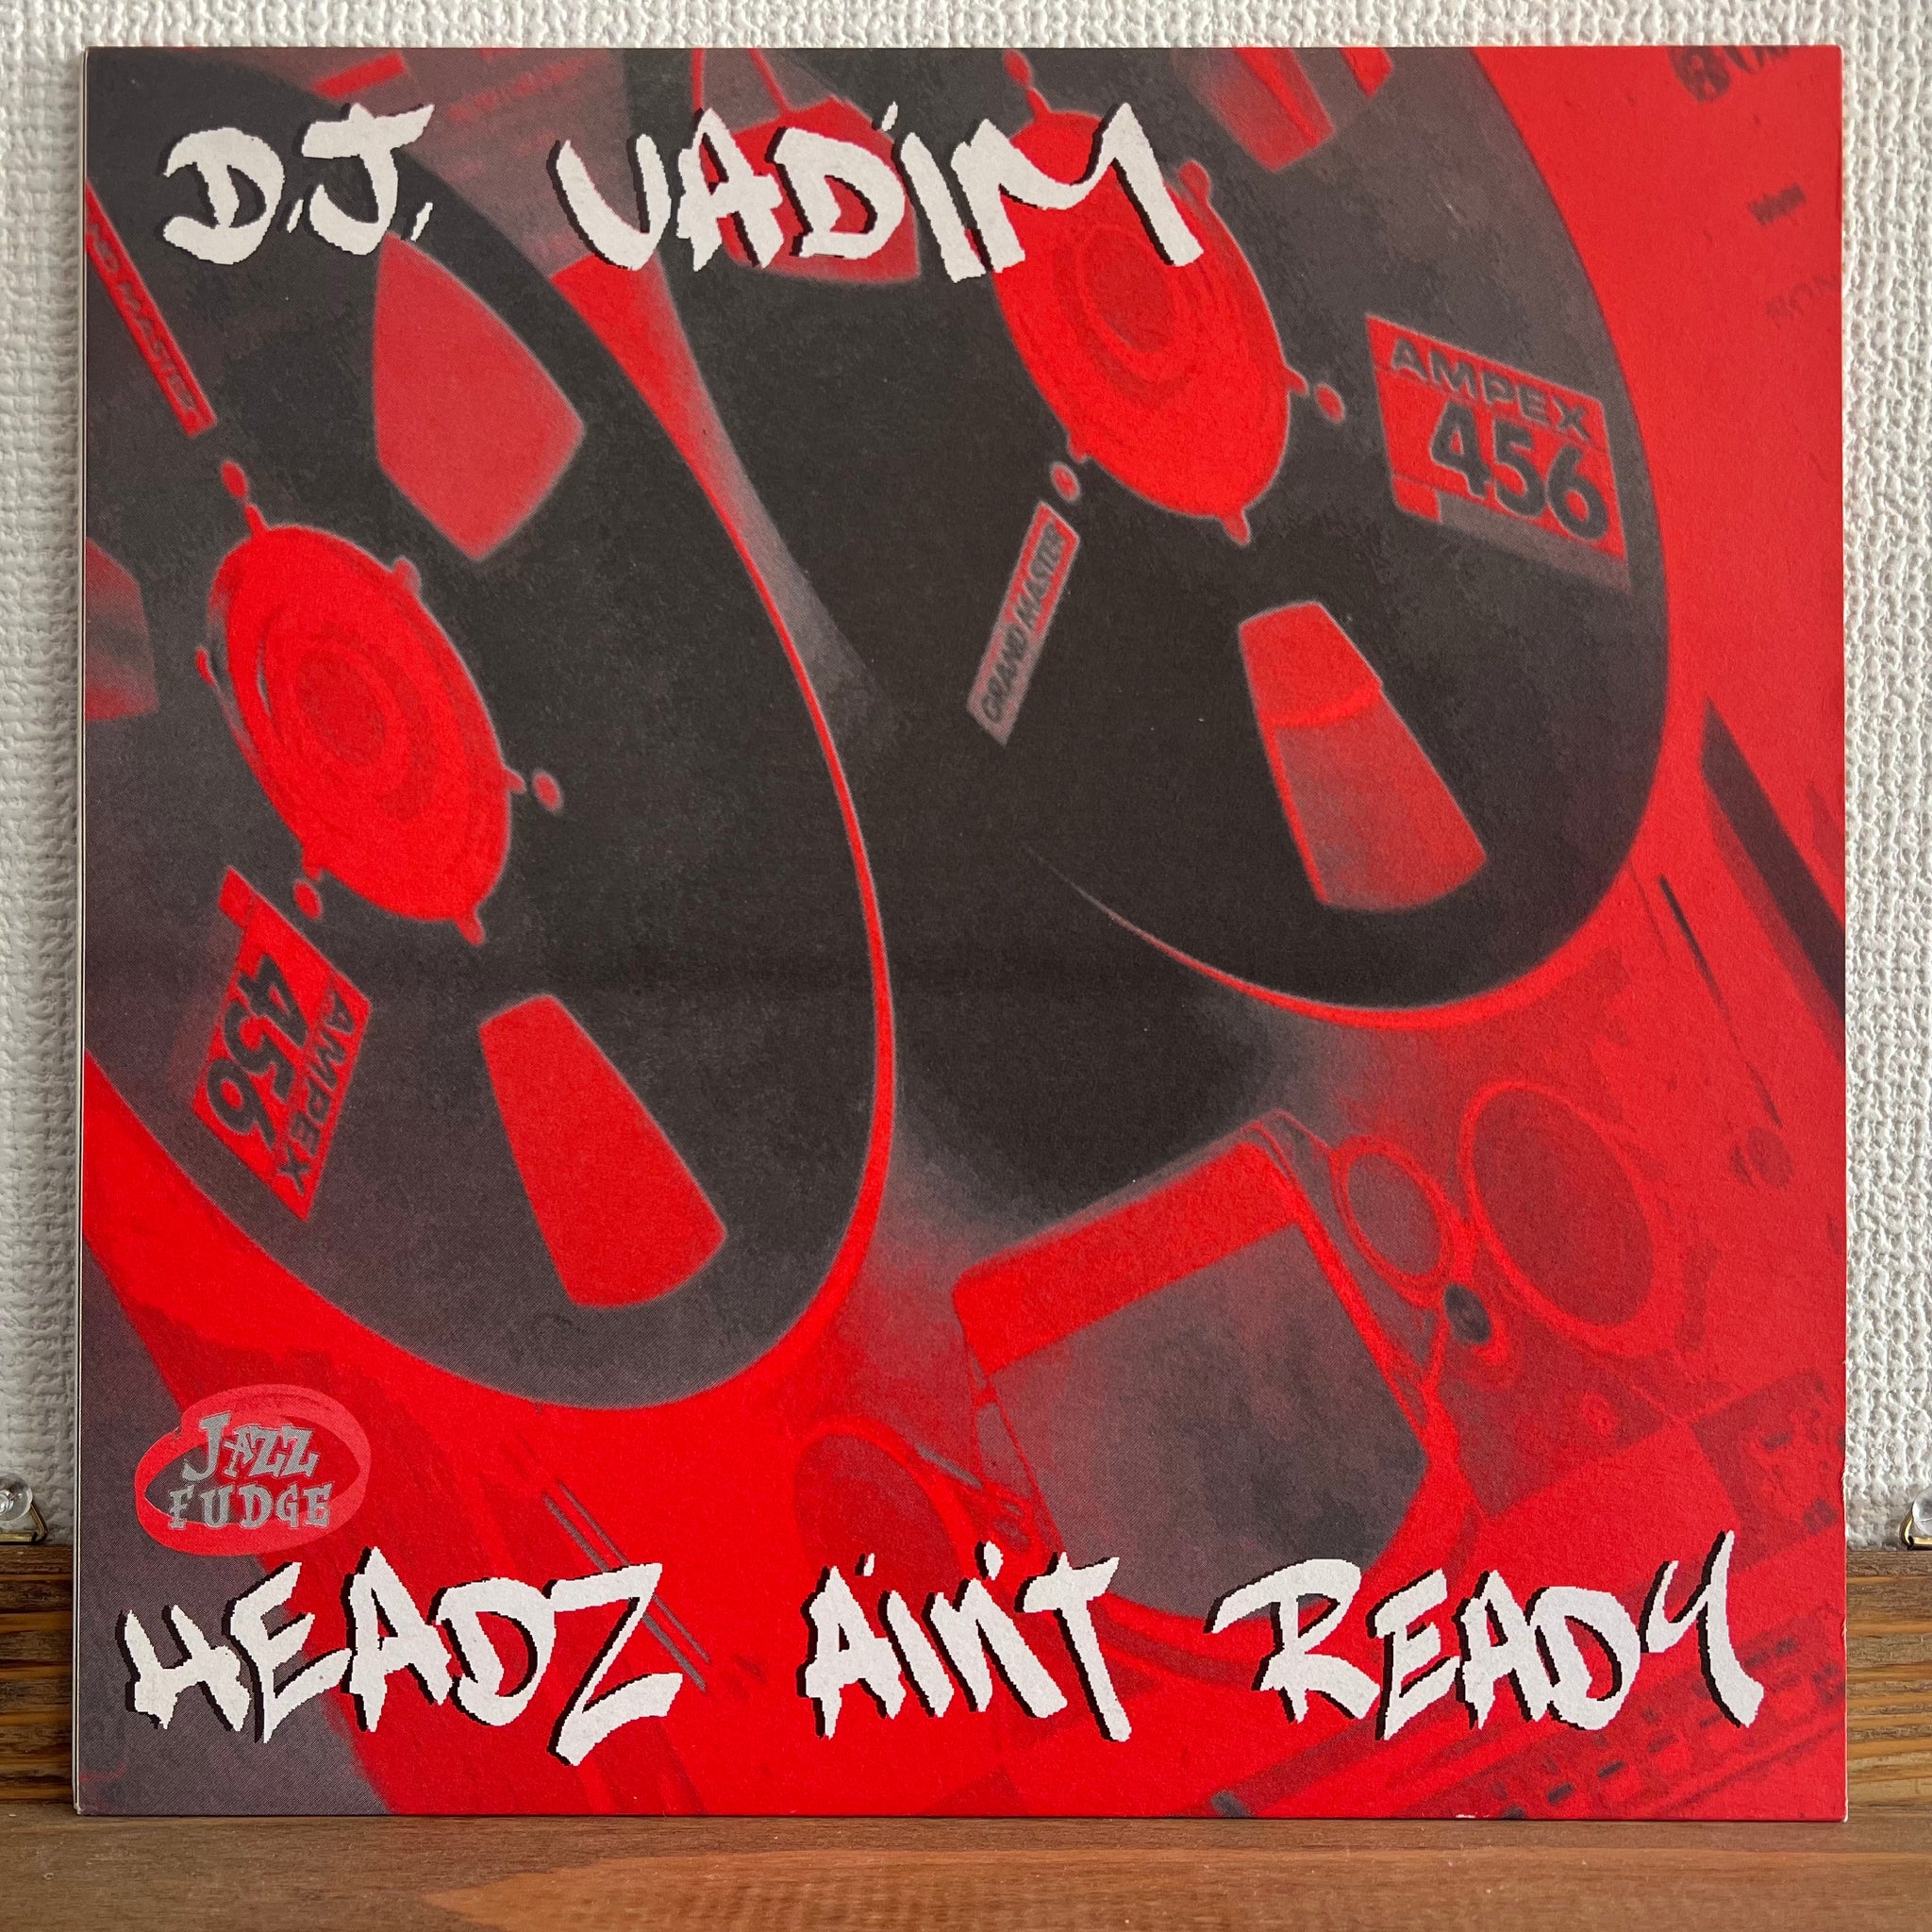 D.J. Vadim -  Headz Ain't Ready